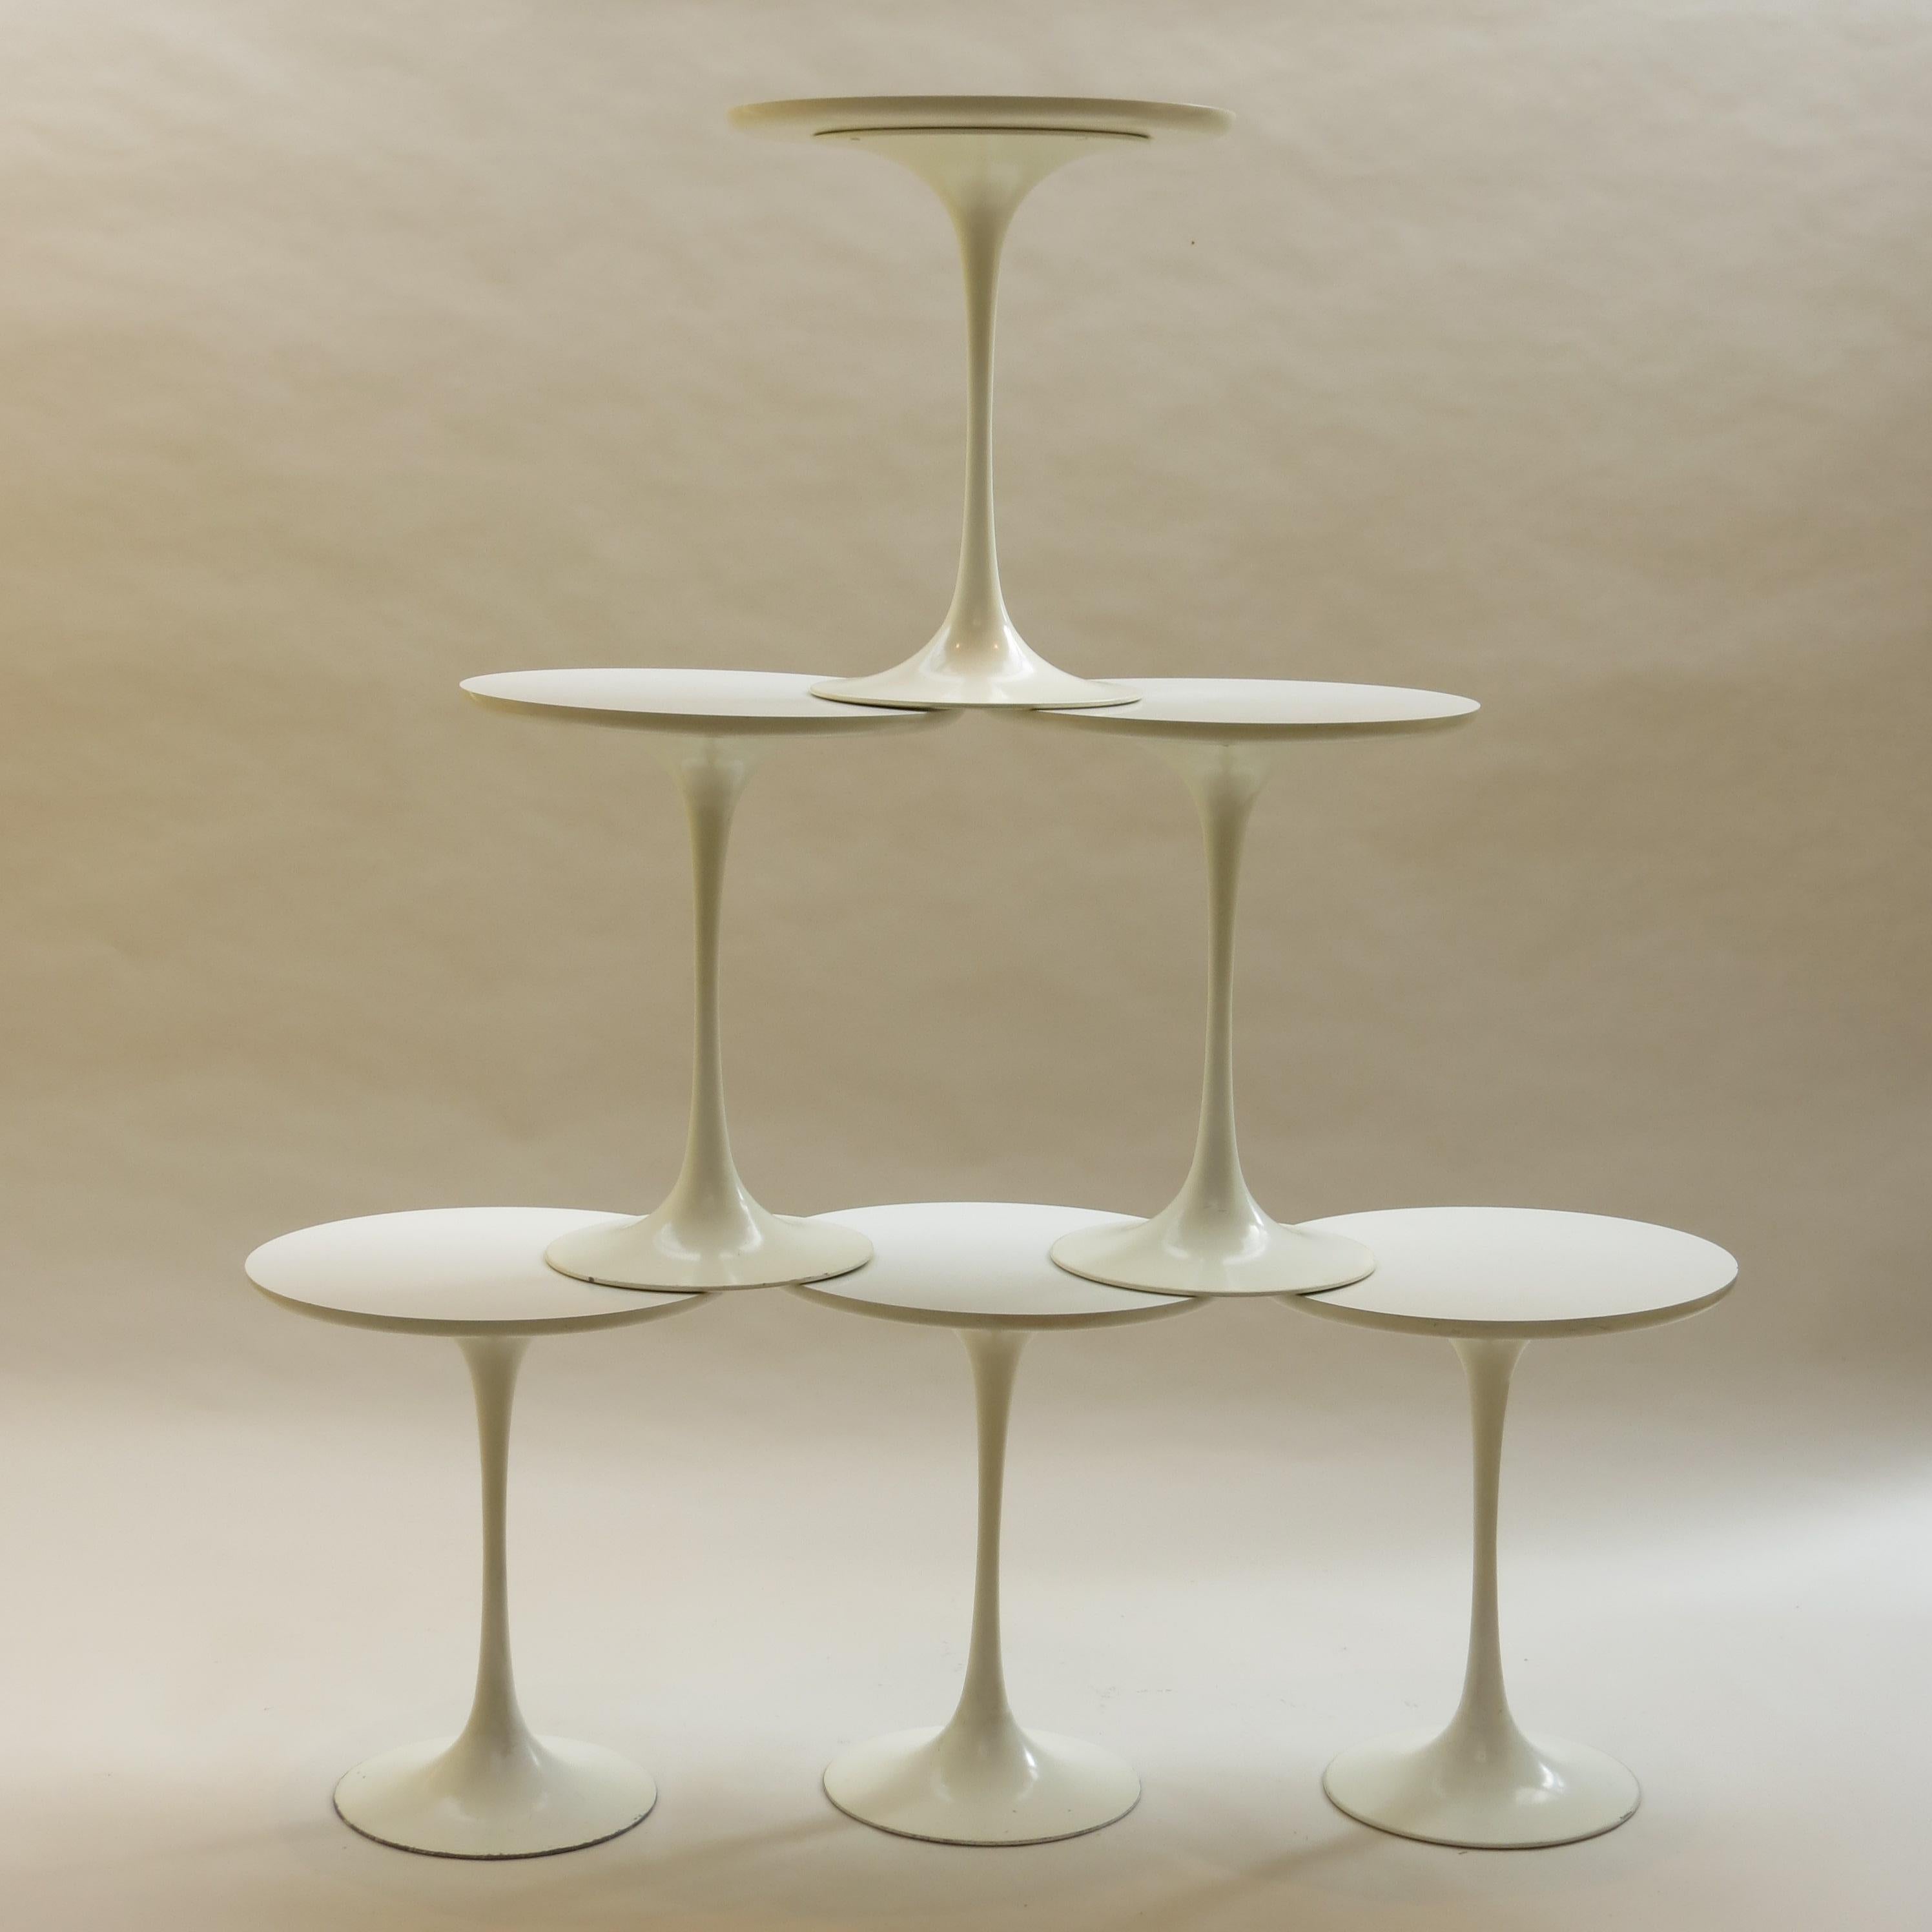 1960s Tulip Side Table designed by Maurice Burke for Arkana, Bath, UK 3